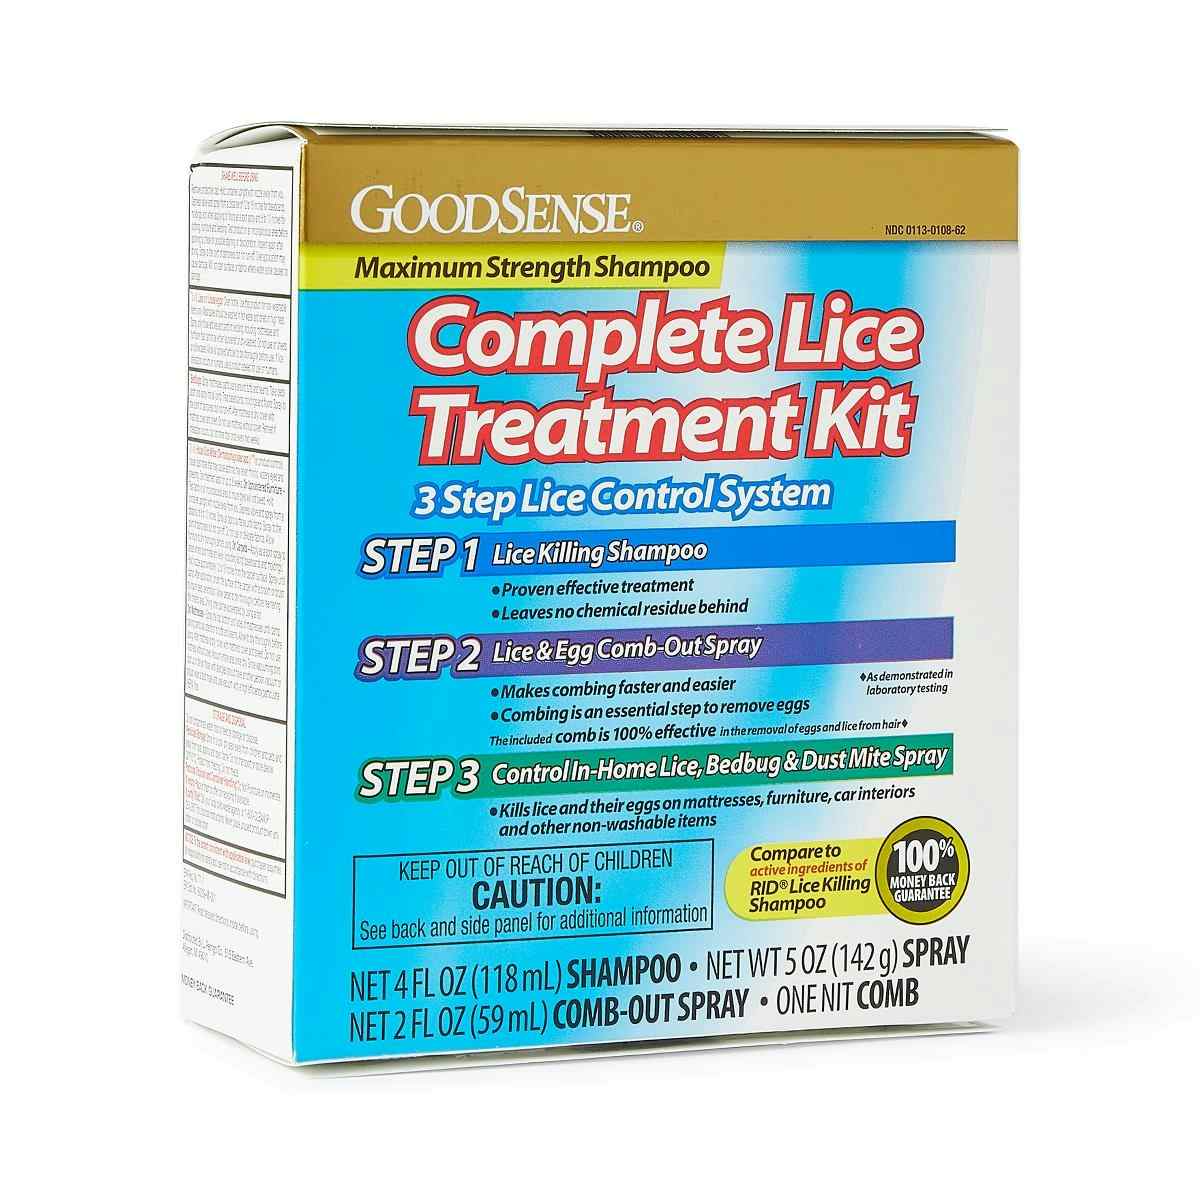 GoodSense Complete Lice Treatment Kit, OTC010162, 1 Kit